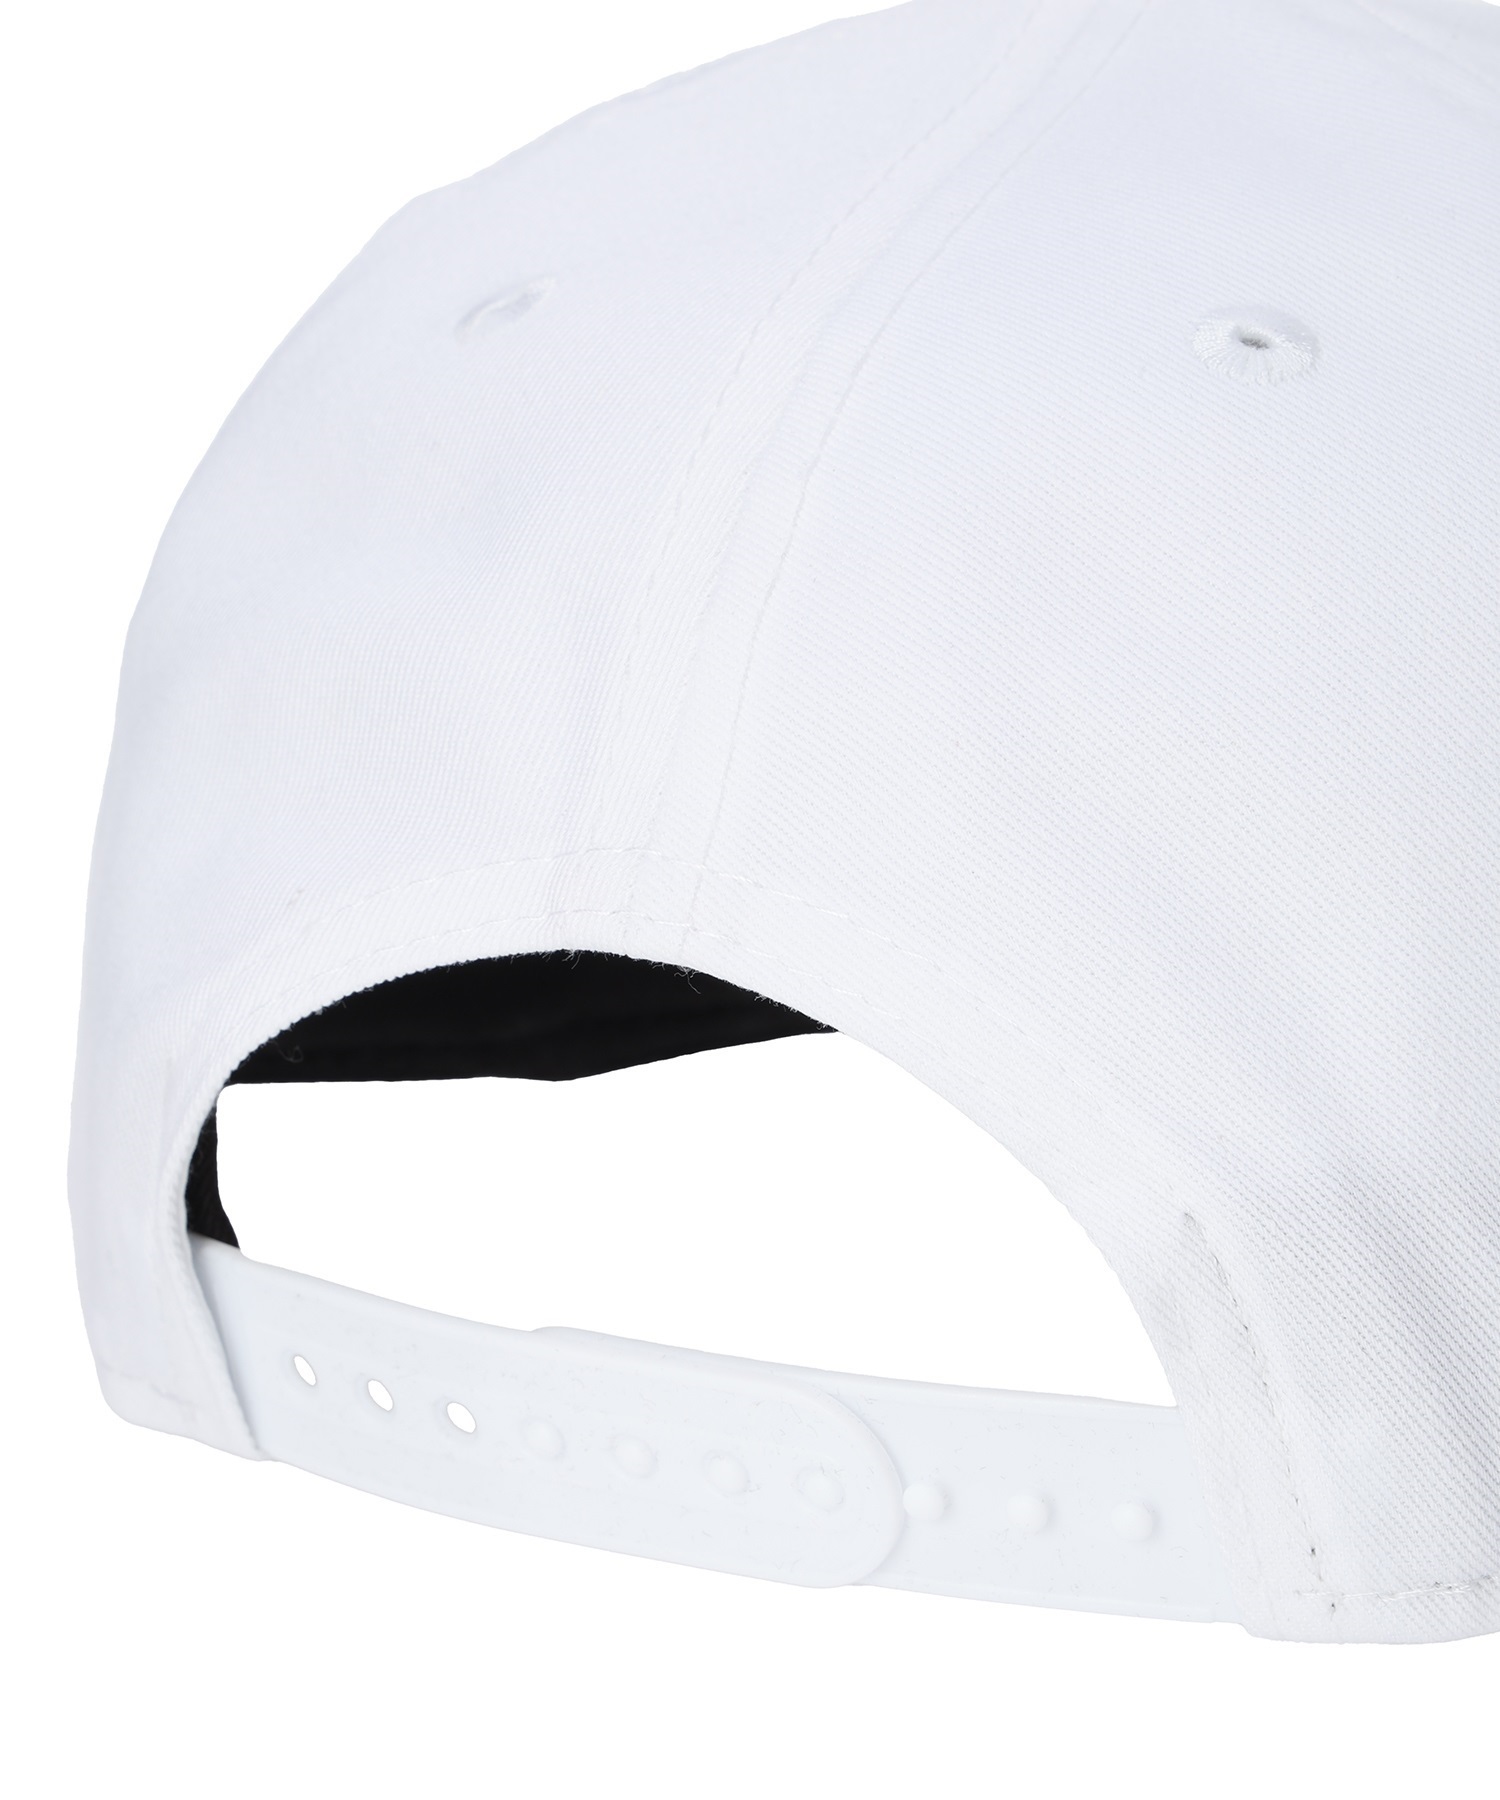 NEW ERA ニューエラ × INDEPENDENT インディペンデント 9FIFTY Original Fit キャップ 帽子 14299642 14299643 ムラサキスポーツ限定(WHT-ONESIZE)